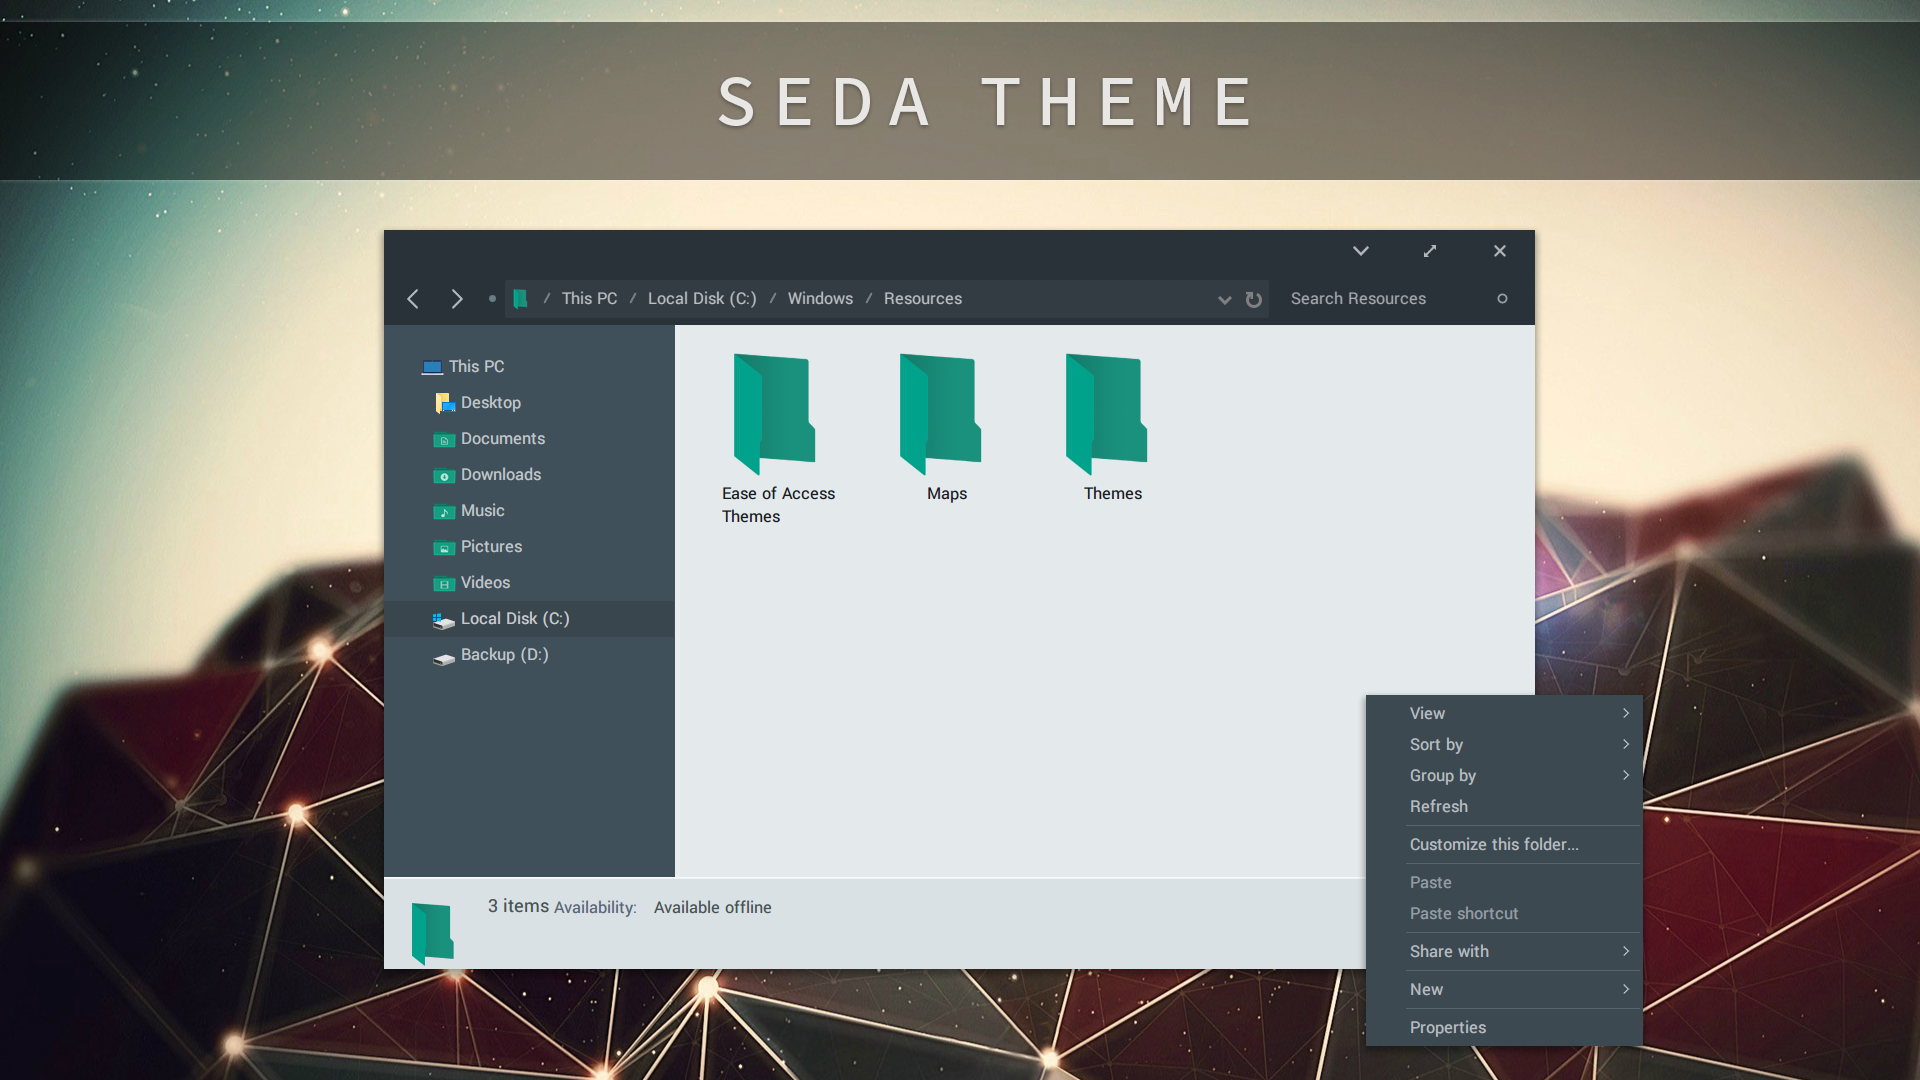 SEDA Theme for Windows 10